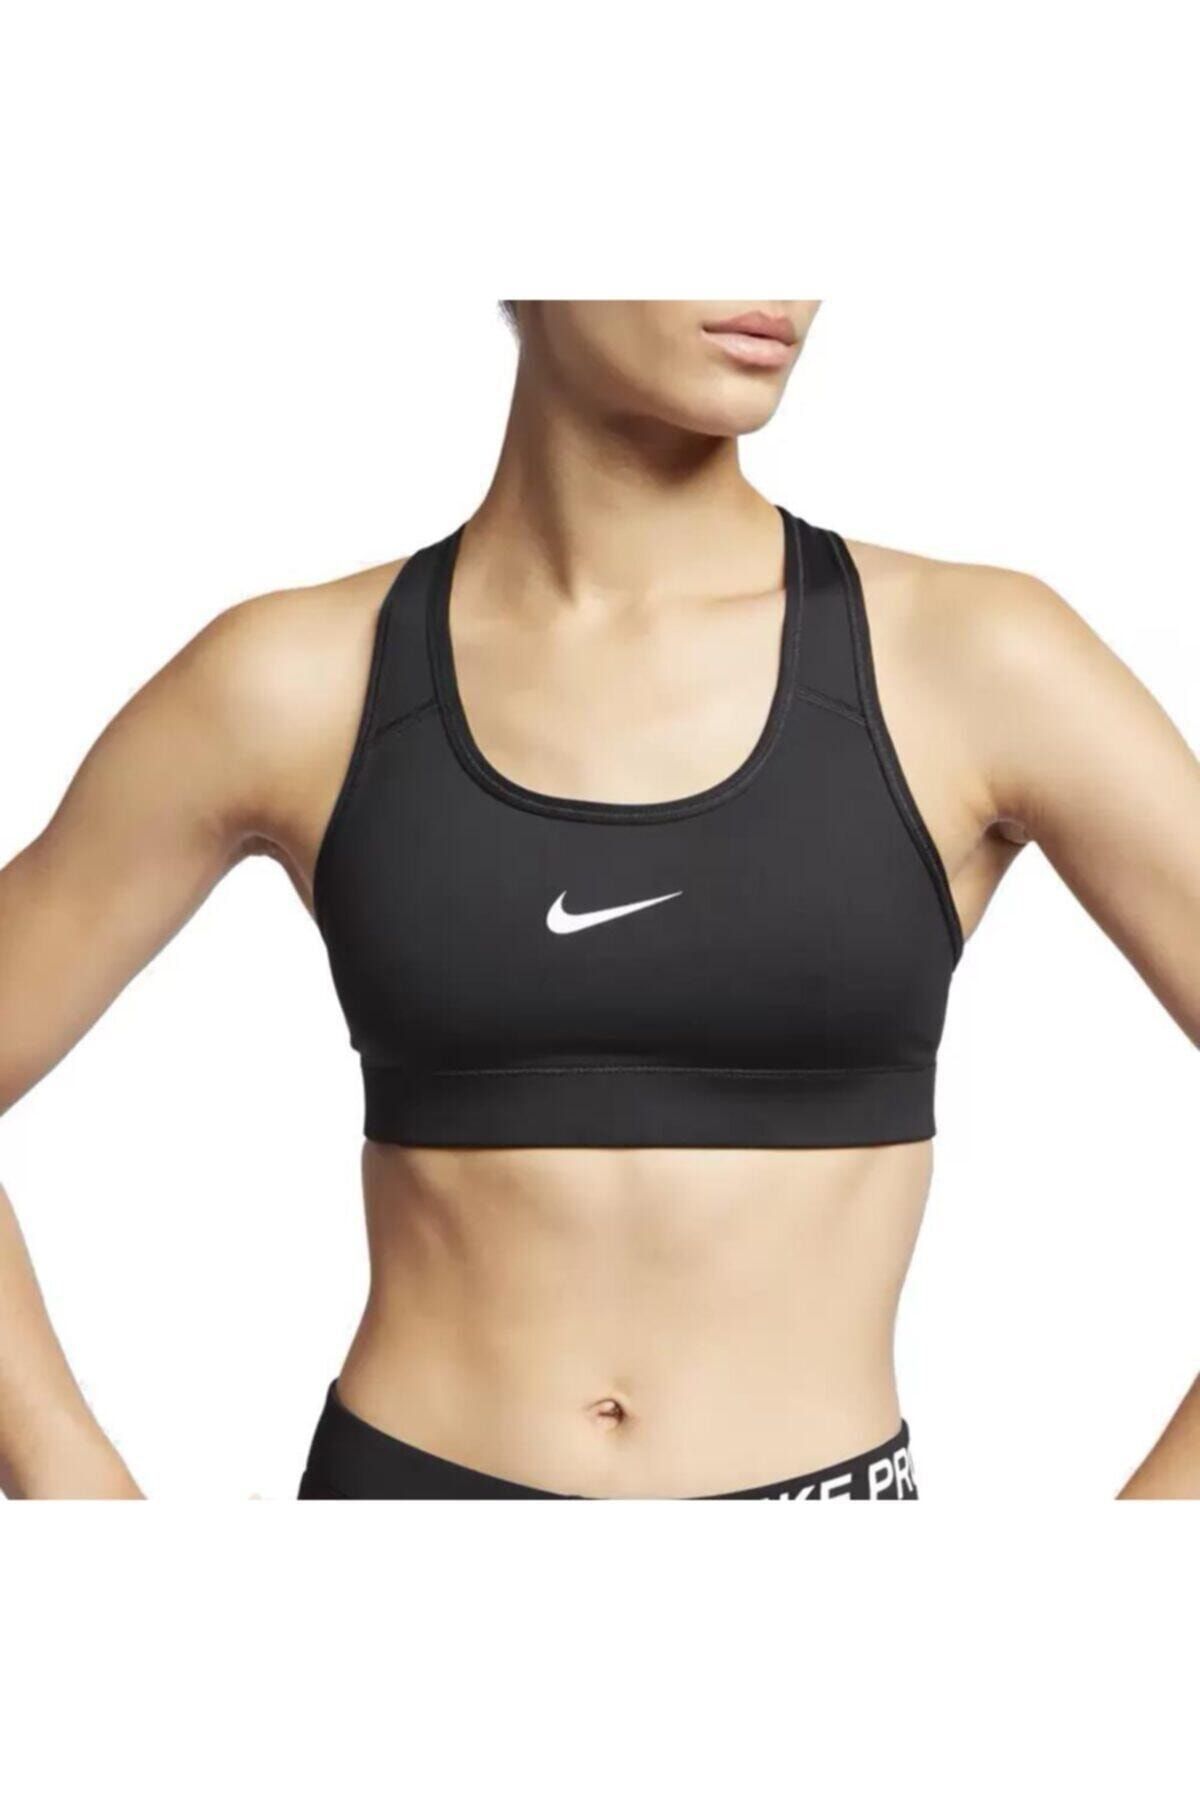 Nike Victory Pro Medium Support Black Women's Sports Bra - 375833